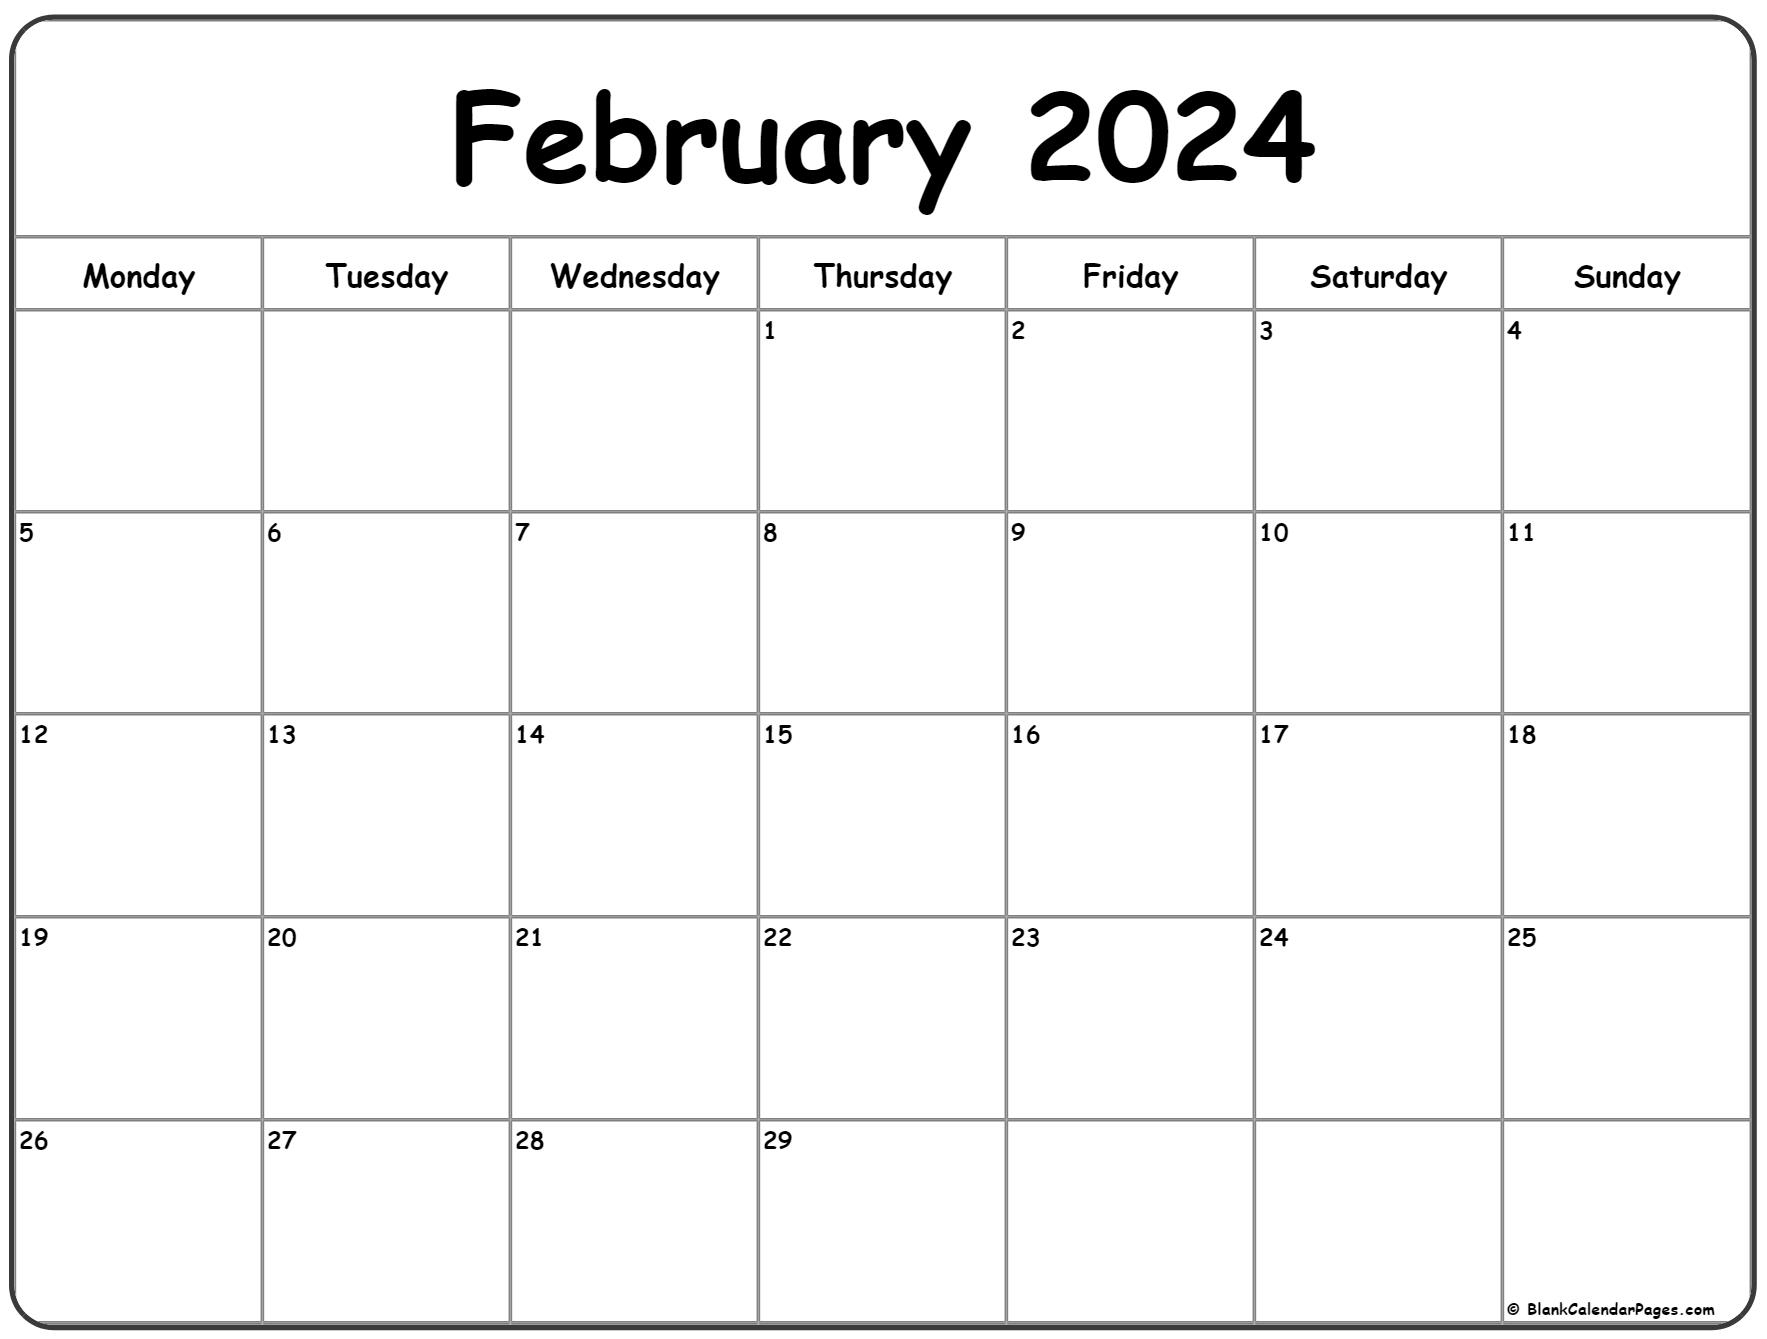 February 2024 Monday Calendar | Monday To Sunday for Free February Printable Calendar 2024